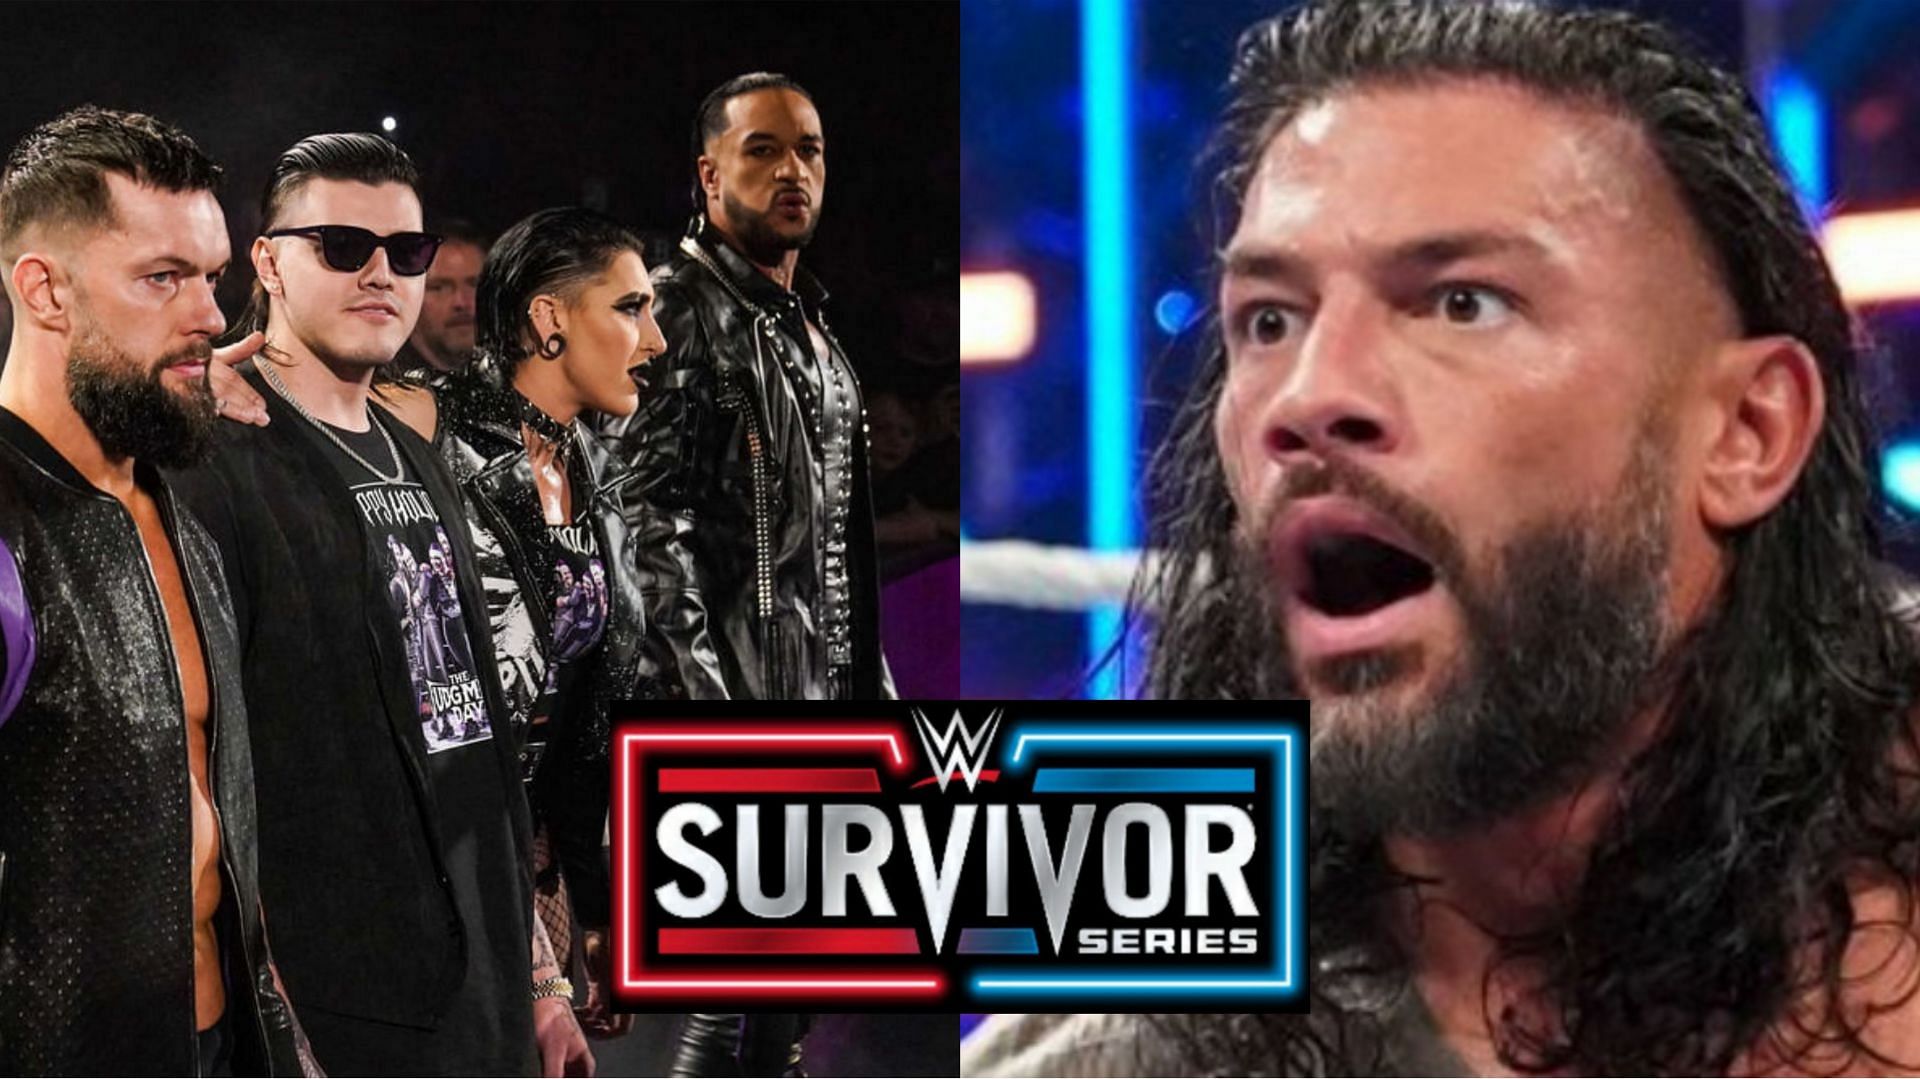 Huge twist in store for WWE Survivor Series?